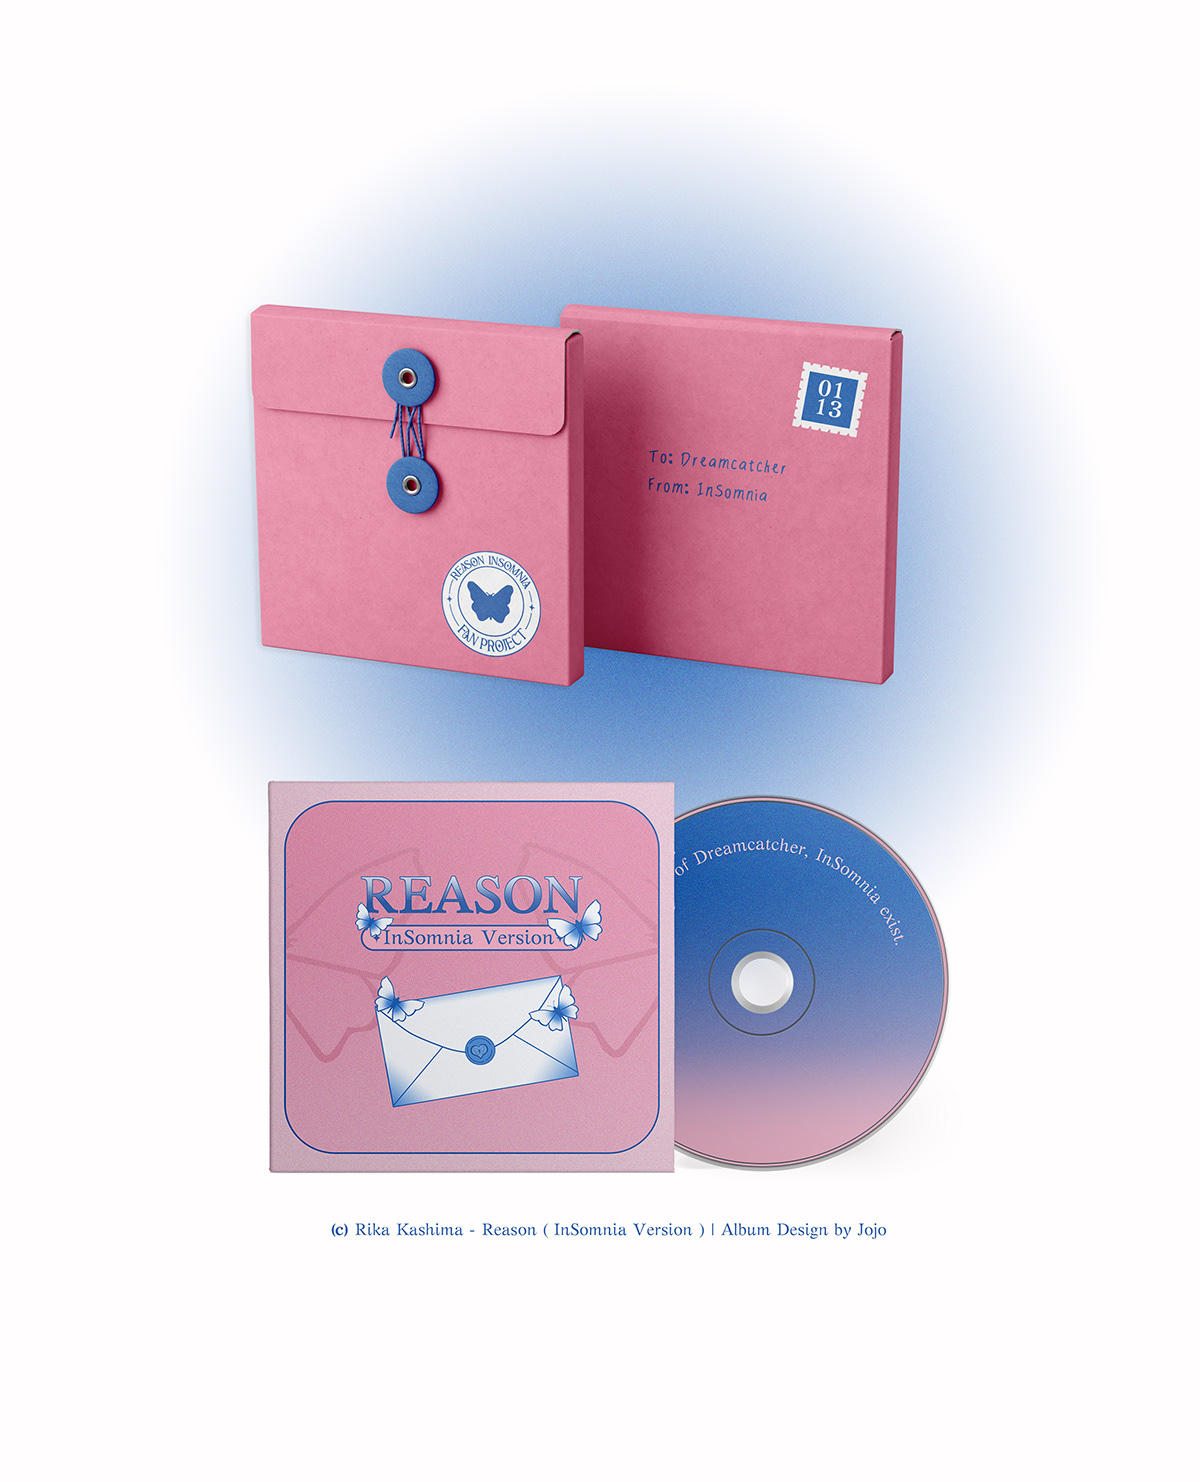 Dreamcatcher packaging design CD design album art Album design dreamcatcher kpop deukae dreamcatcher album dreamcatcher reason Fan Project